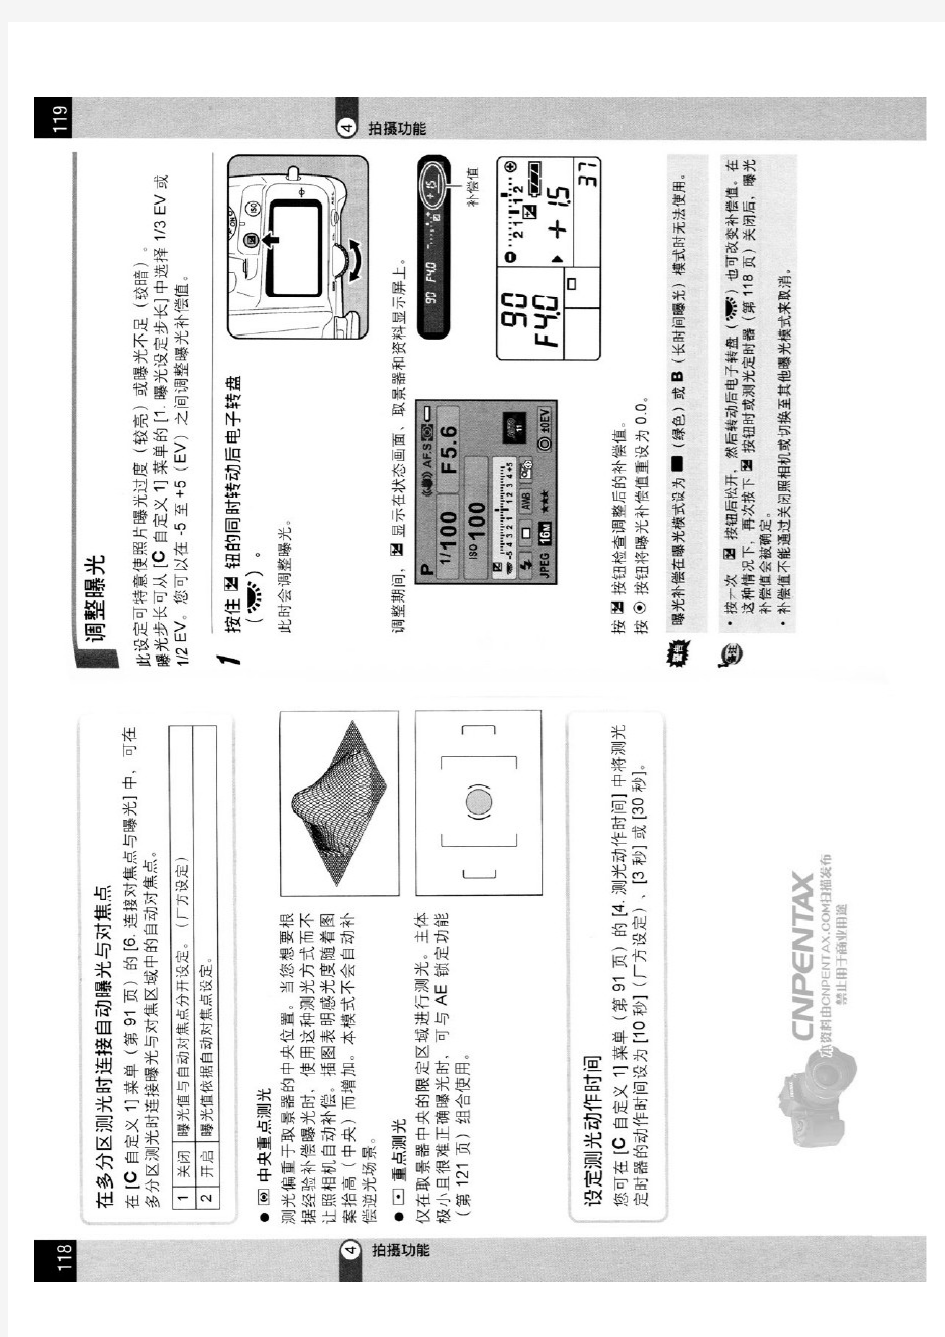 pentax k5使用手册简体中文版 part 3